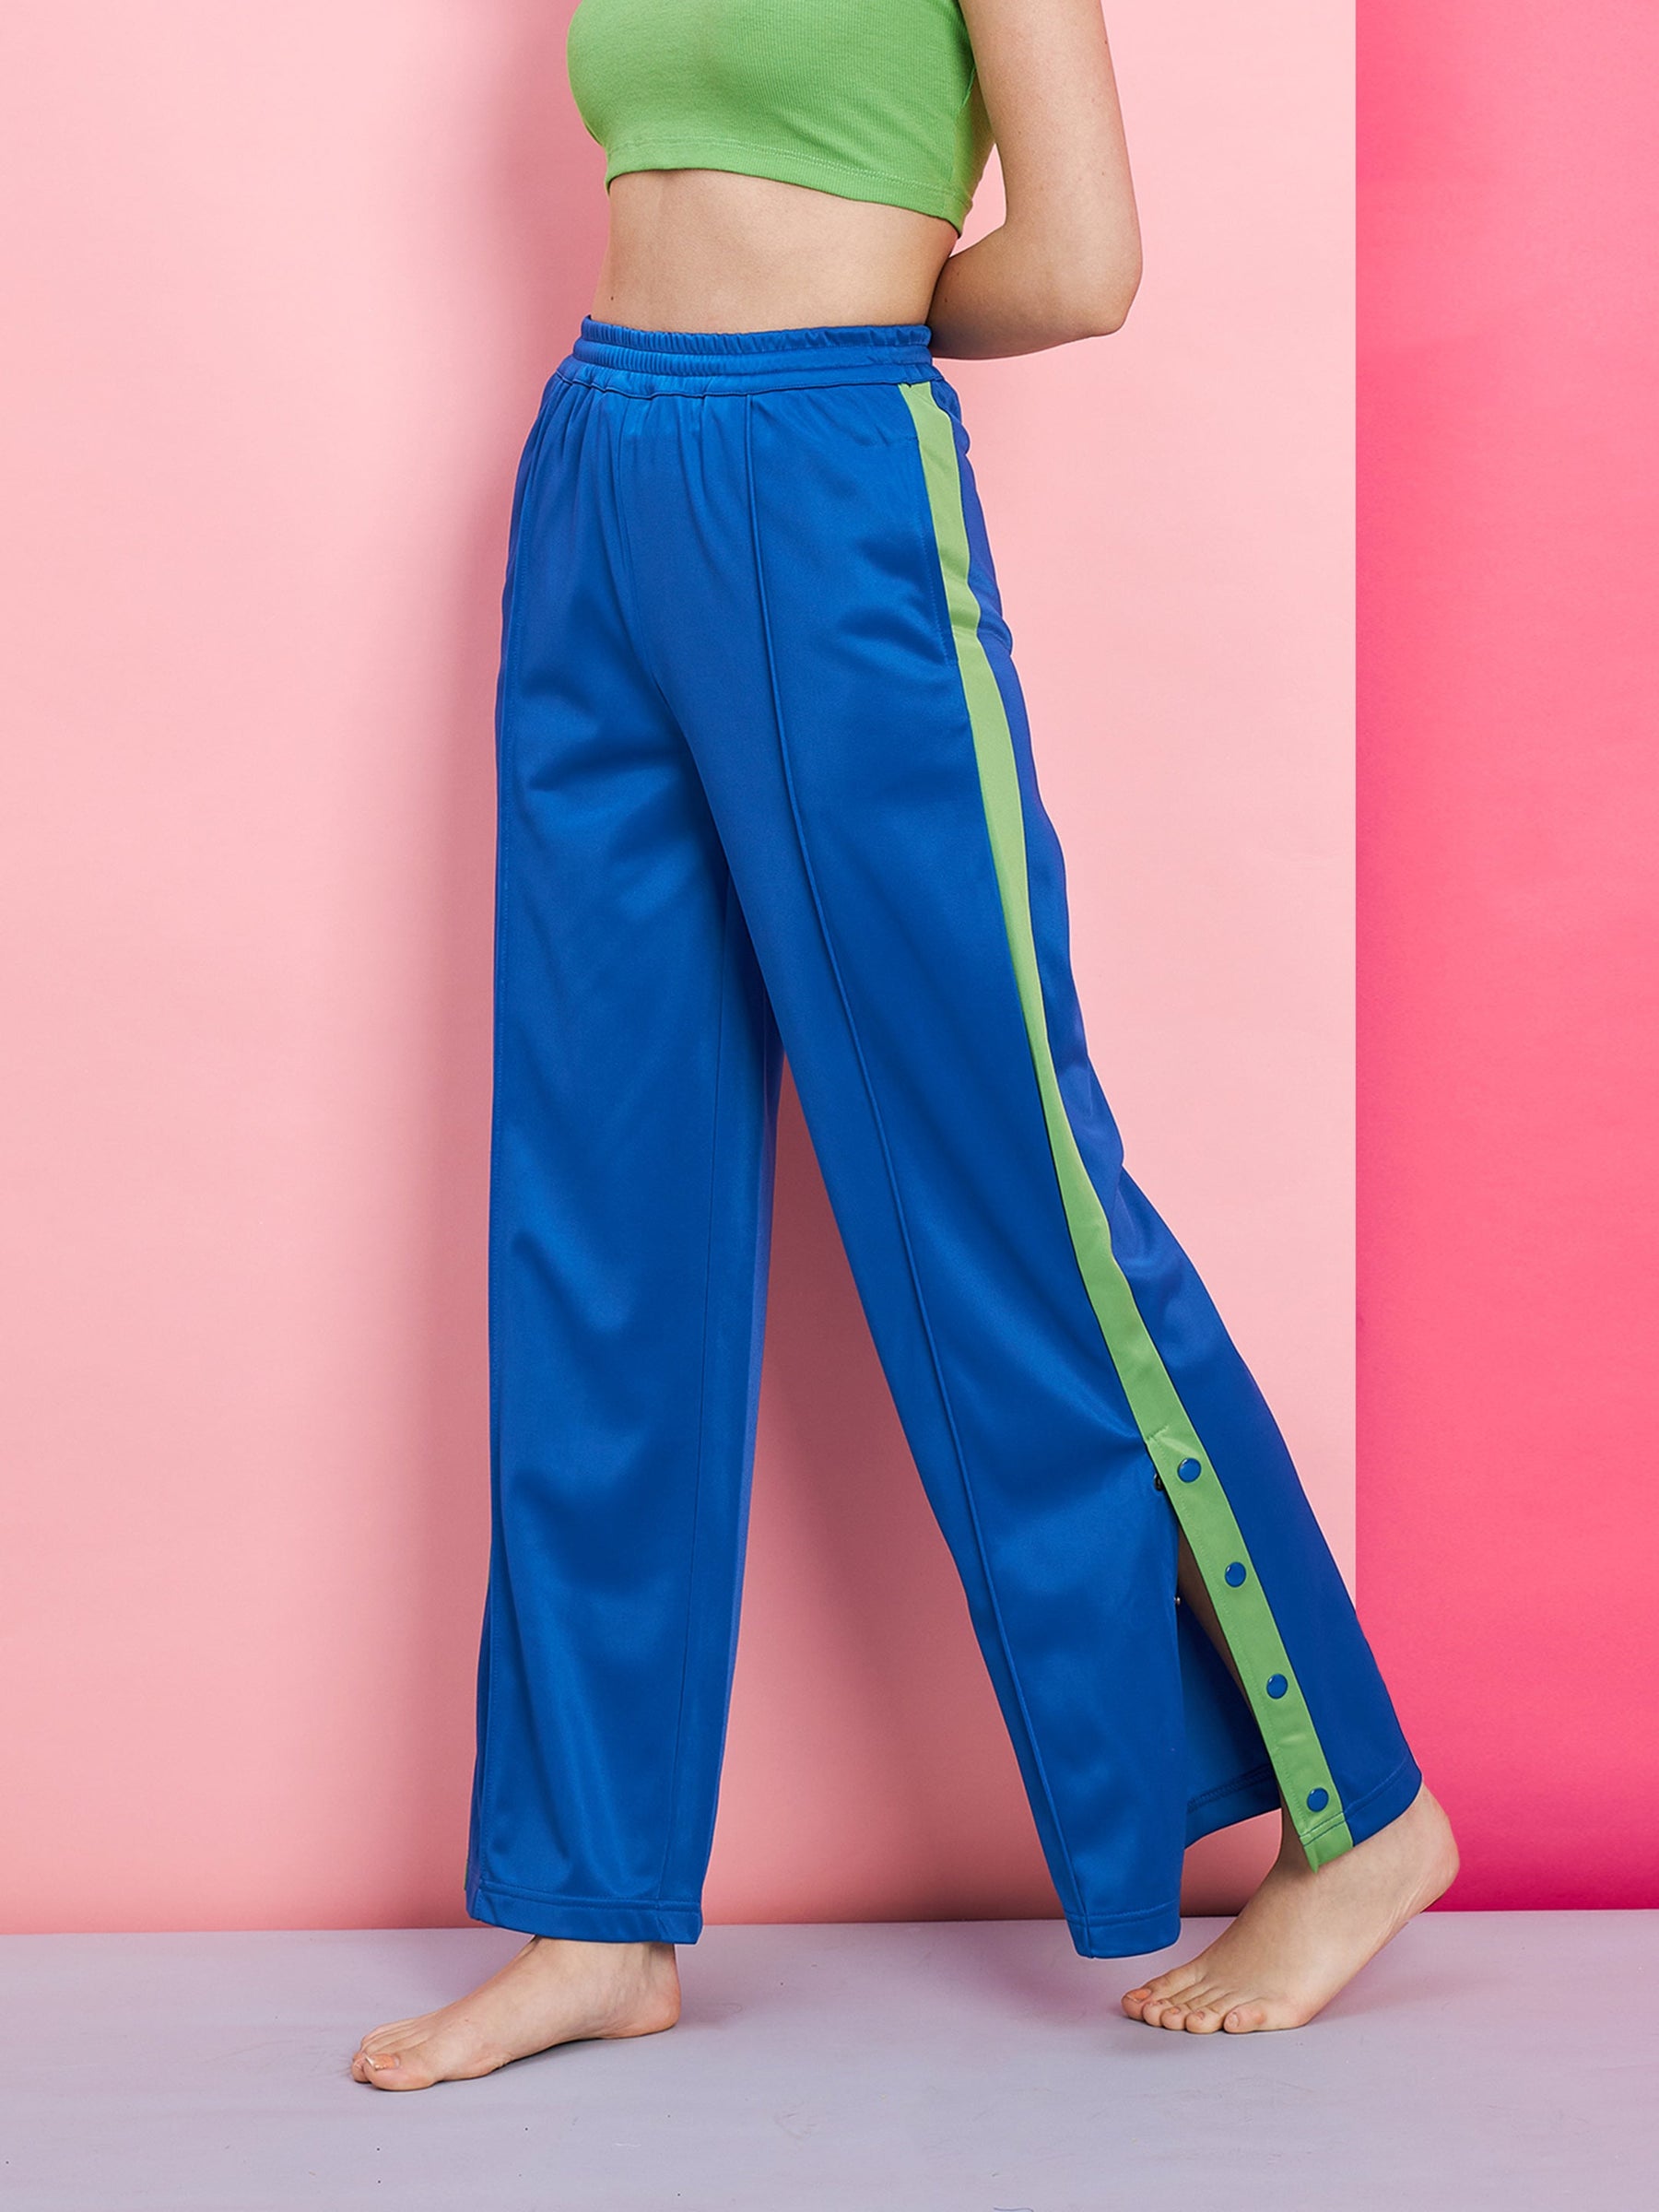 Buy PUMA Blue Printed Cotton Slim Fit Women's Track Pants | Shoppers Stop